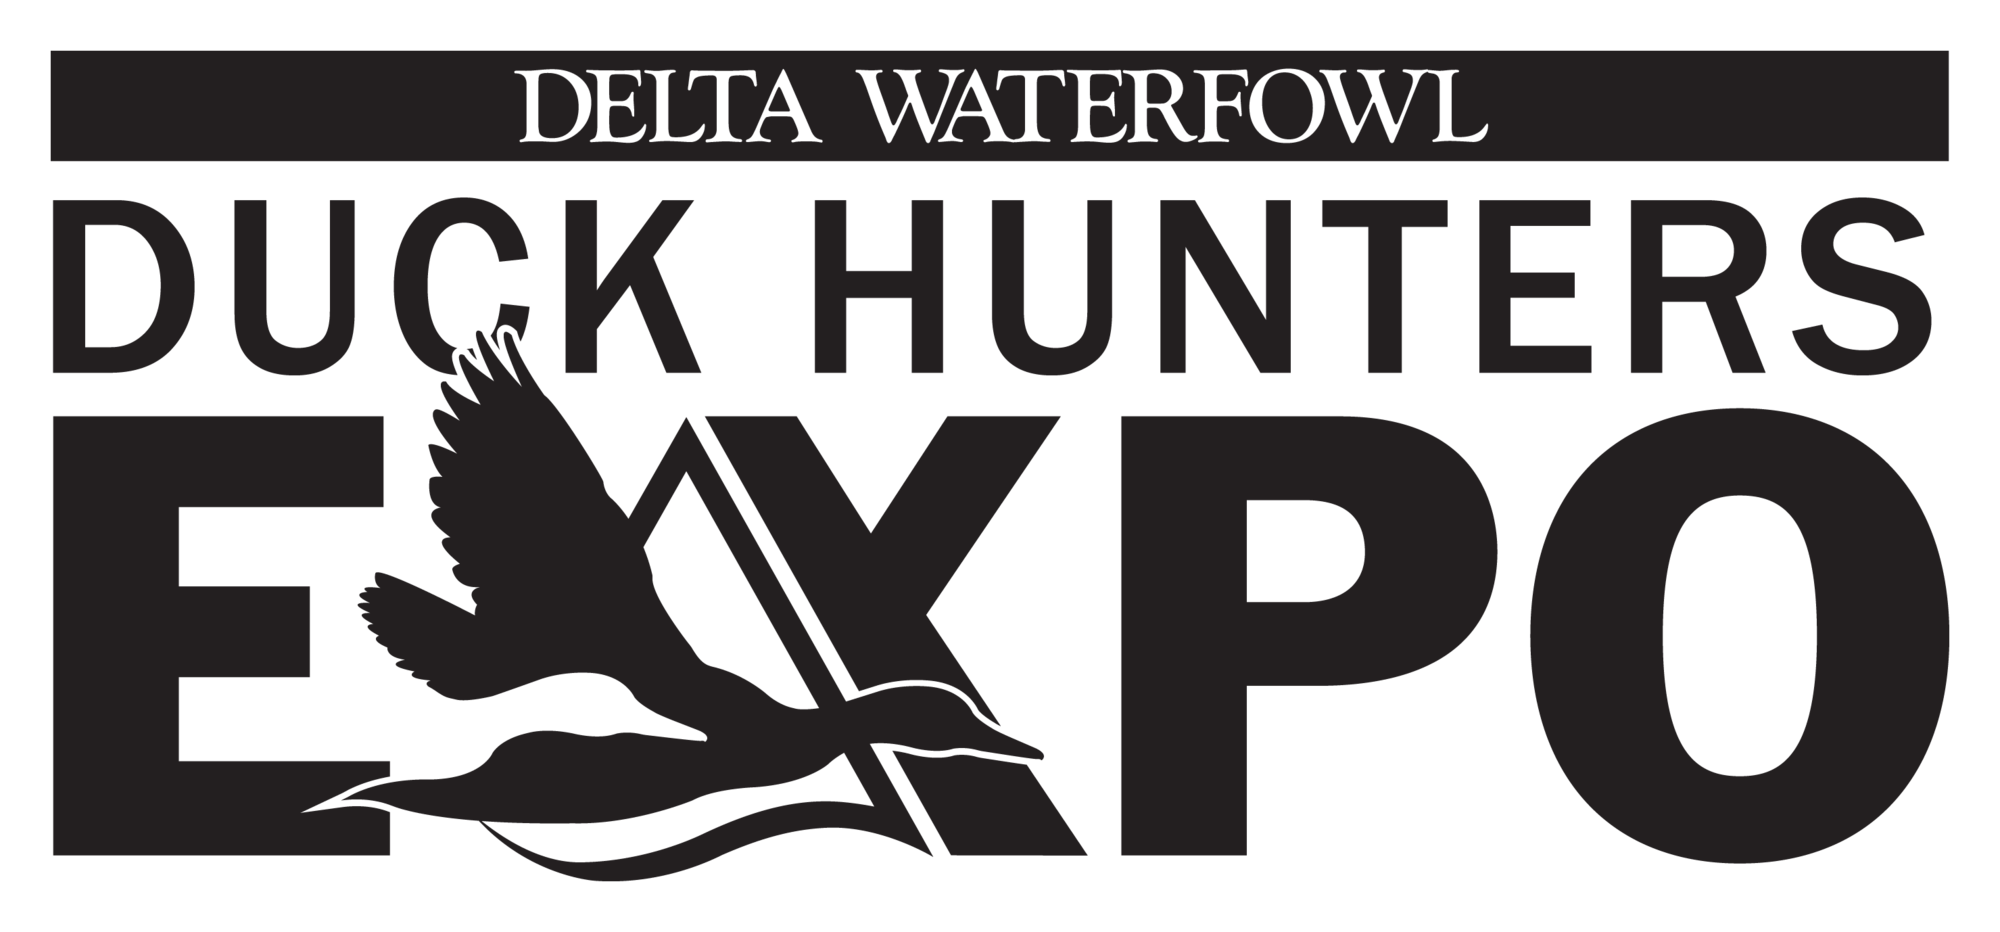 Delta Waterfowl Duck Hunters Expo